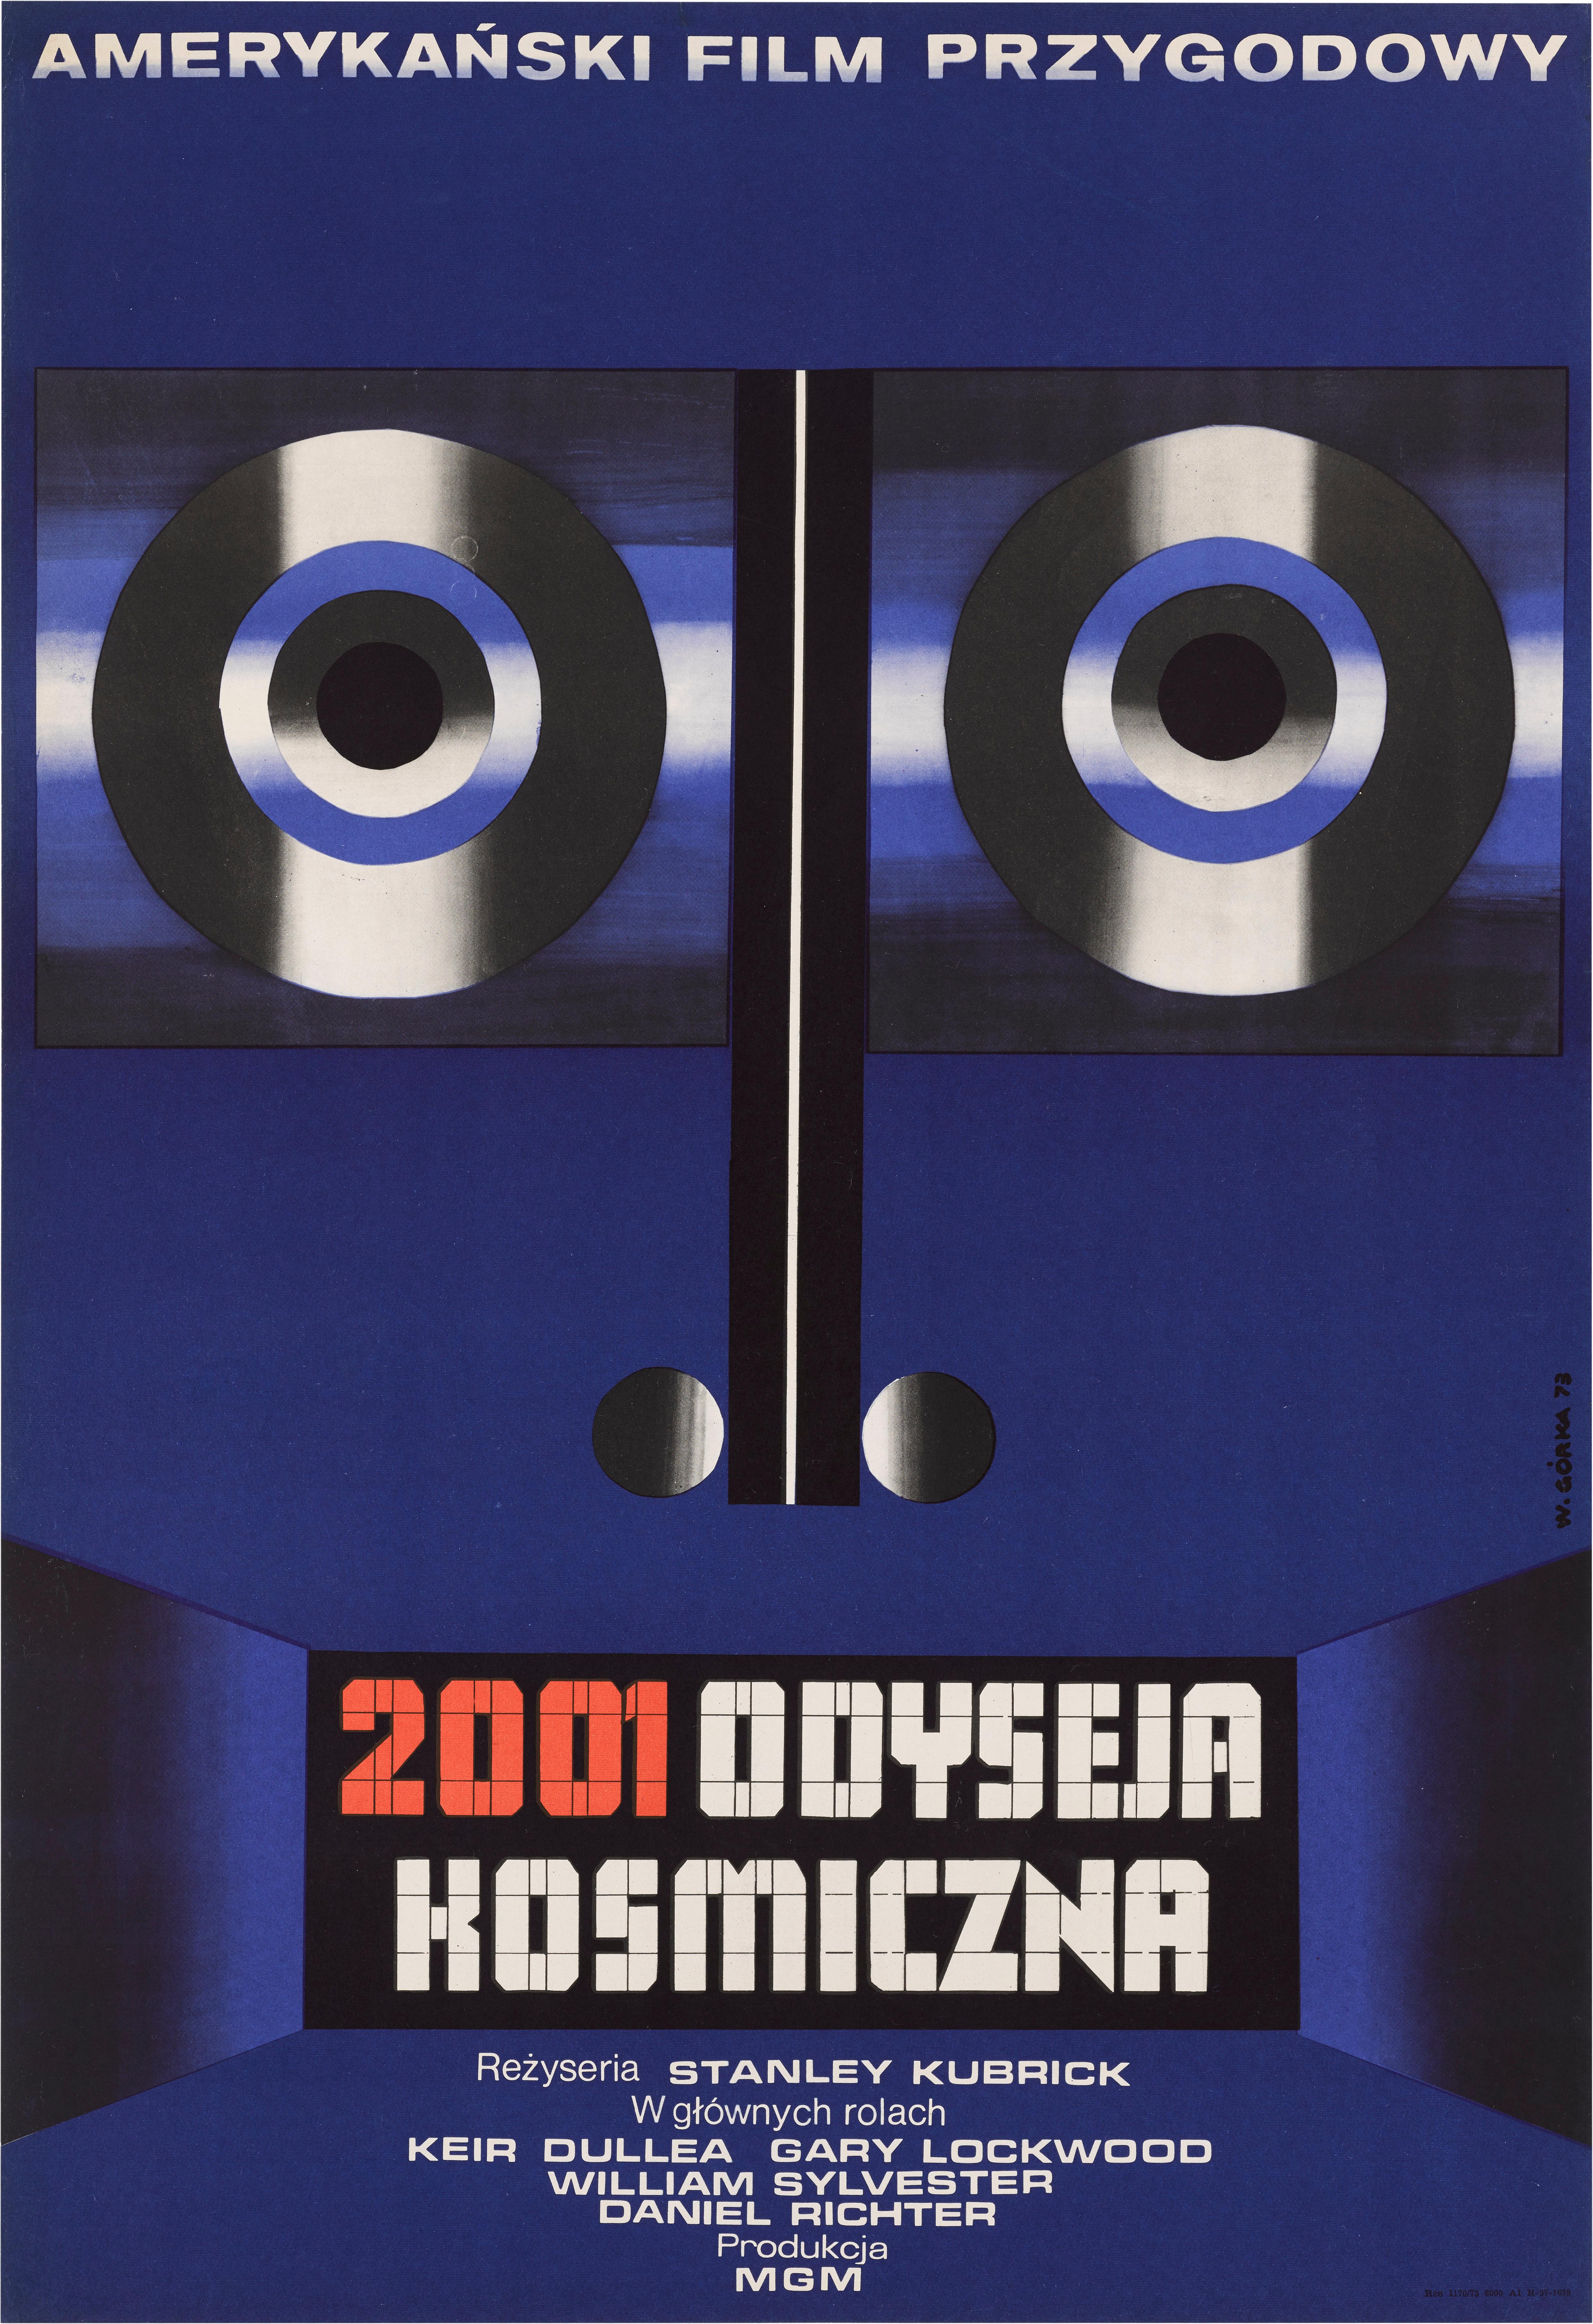 2001 space odyssey poster original